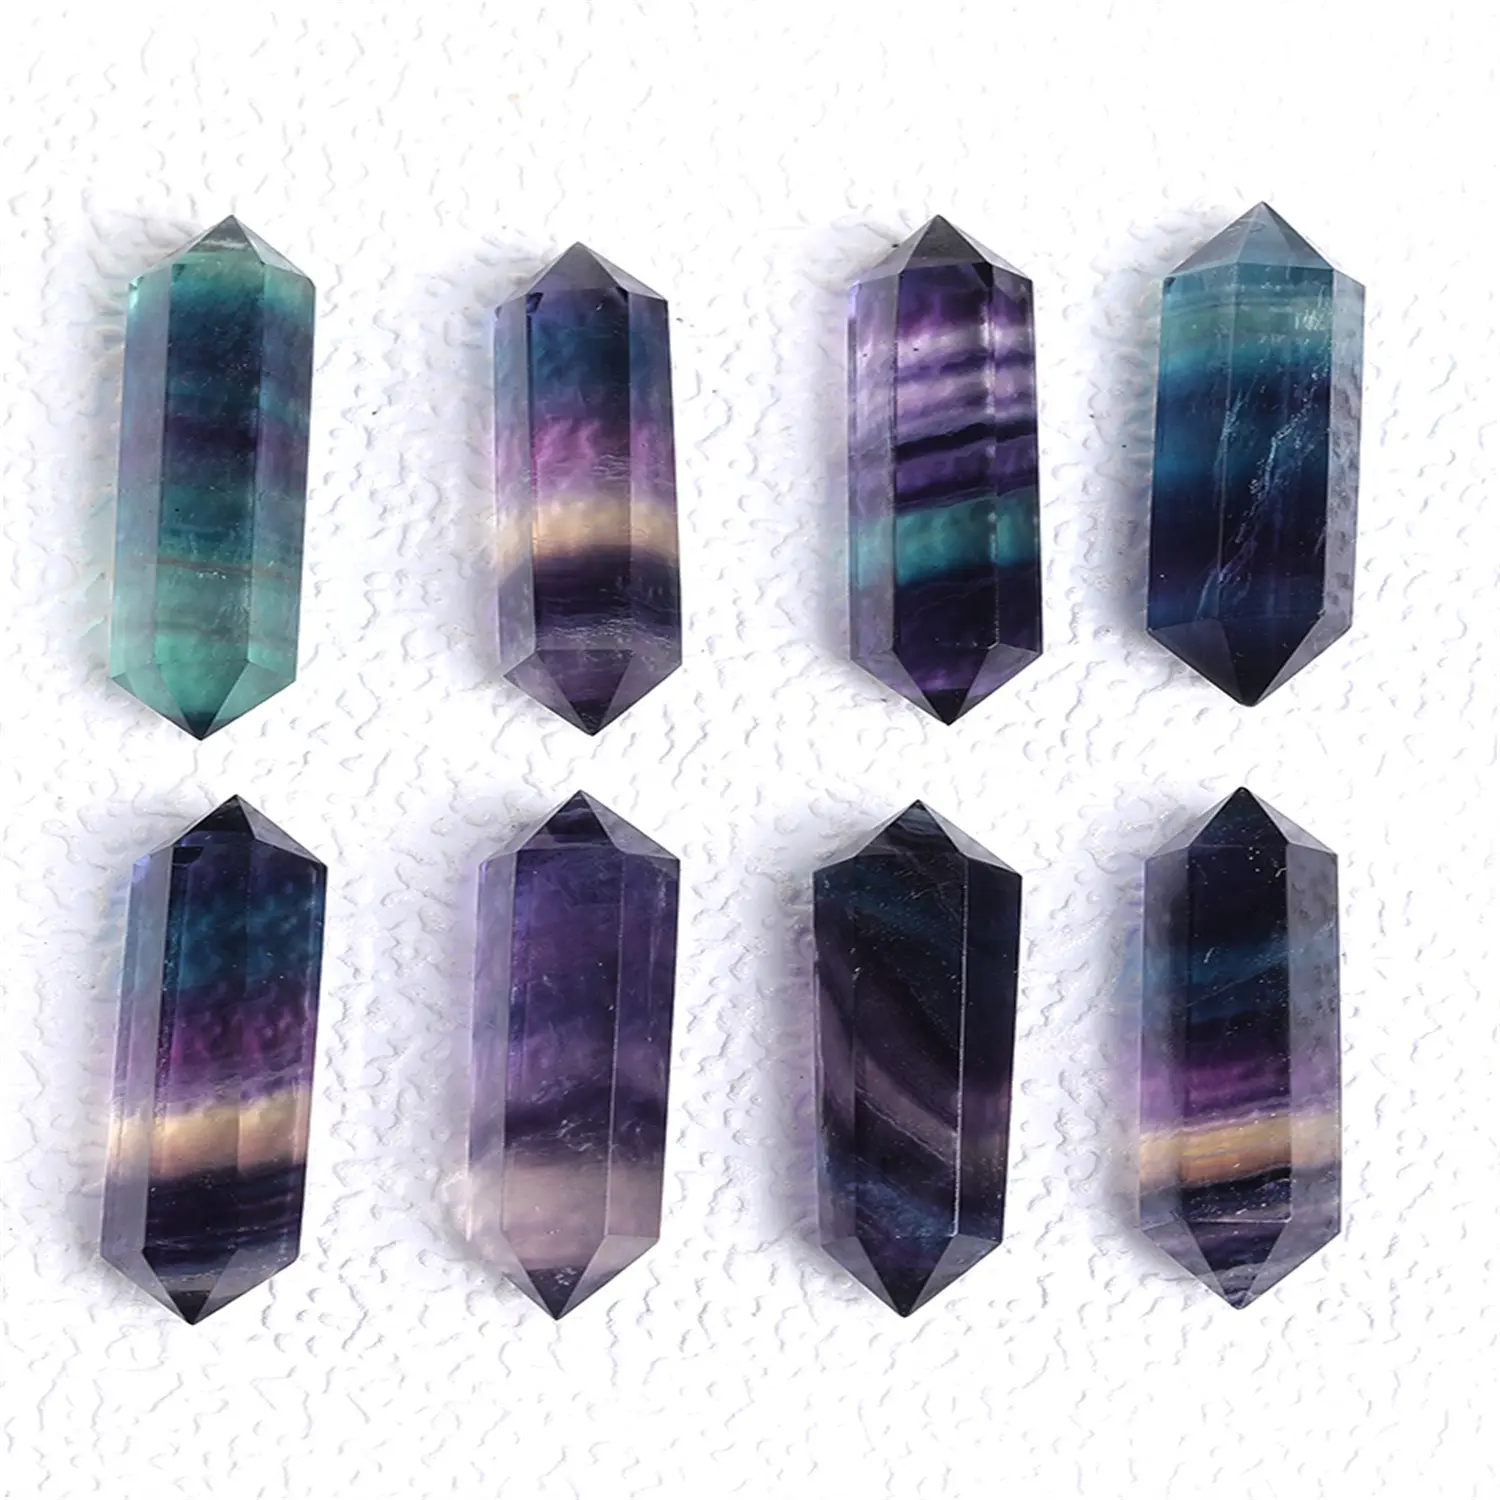 Columna de cristal de doble punta de fluorita Natural de siete colores, Prisma hexagonal de fluorita de color, decoración de piedra en bruto de cristal, decoración del hogar